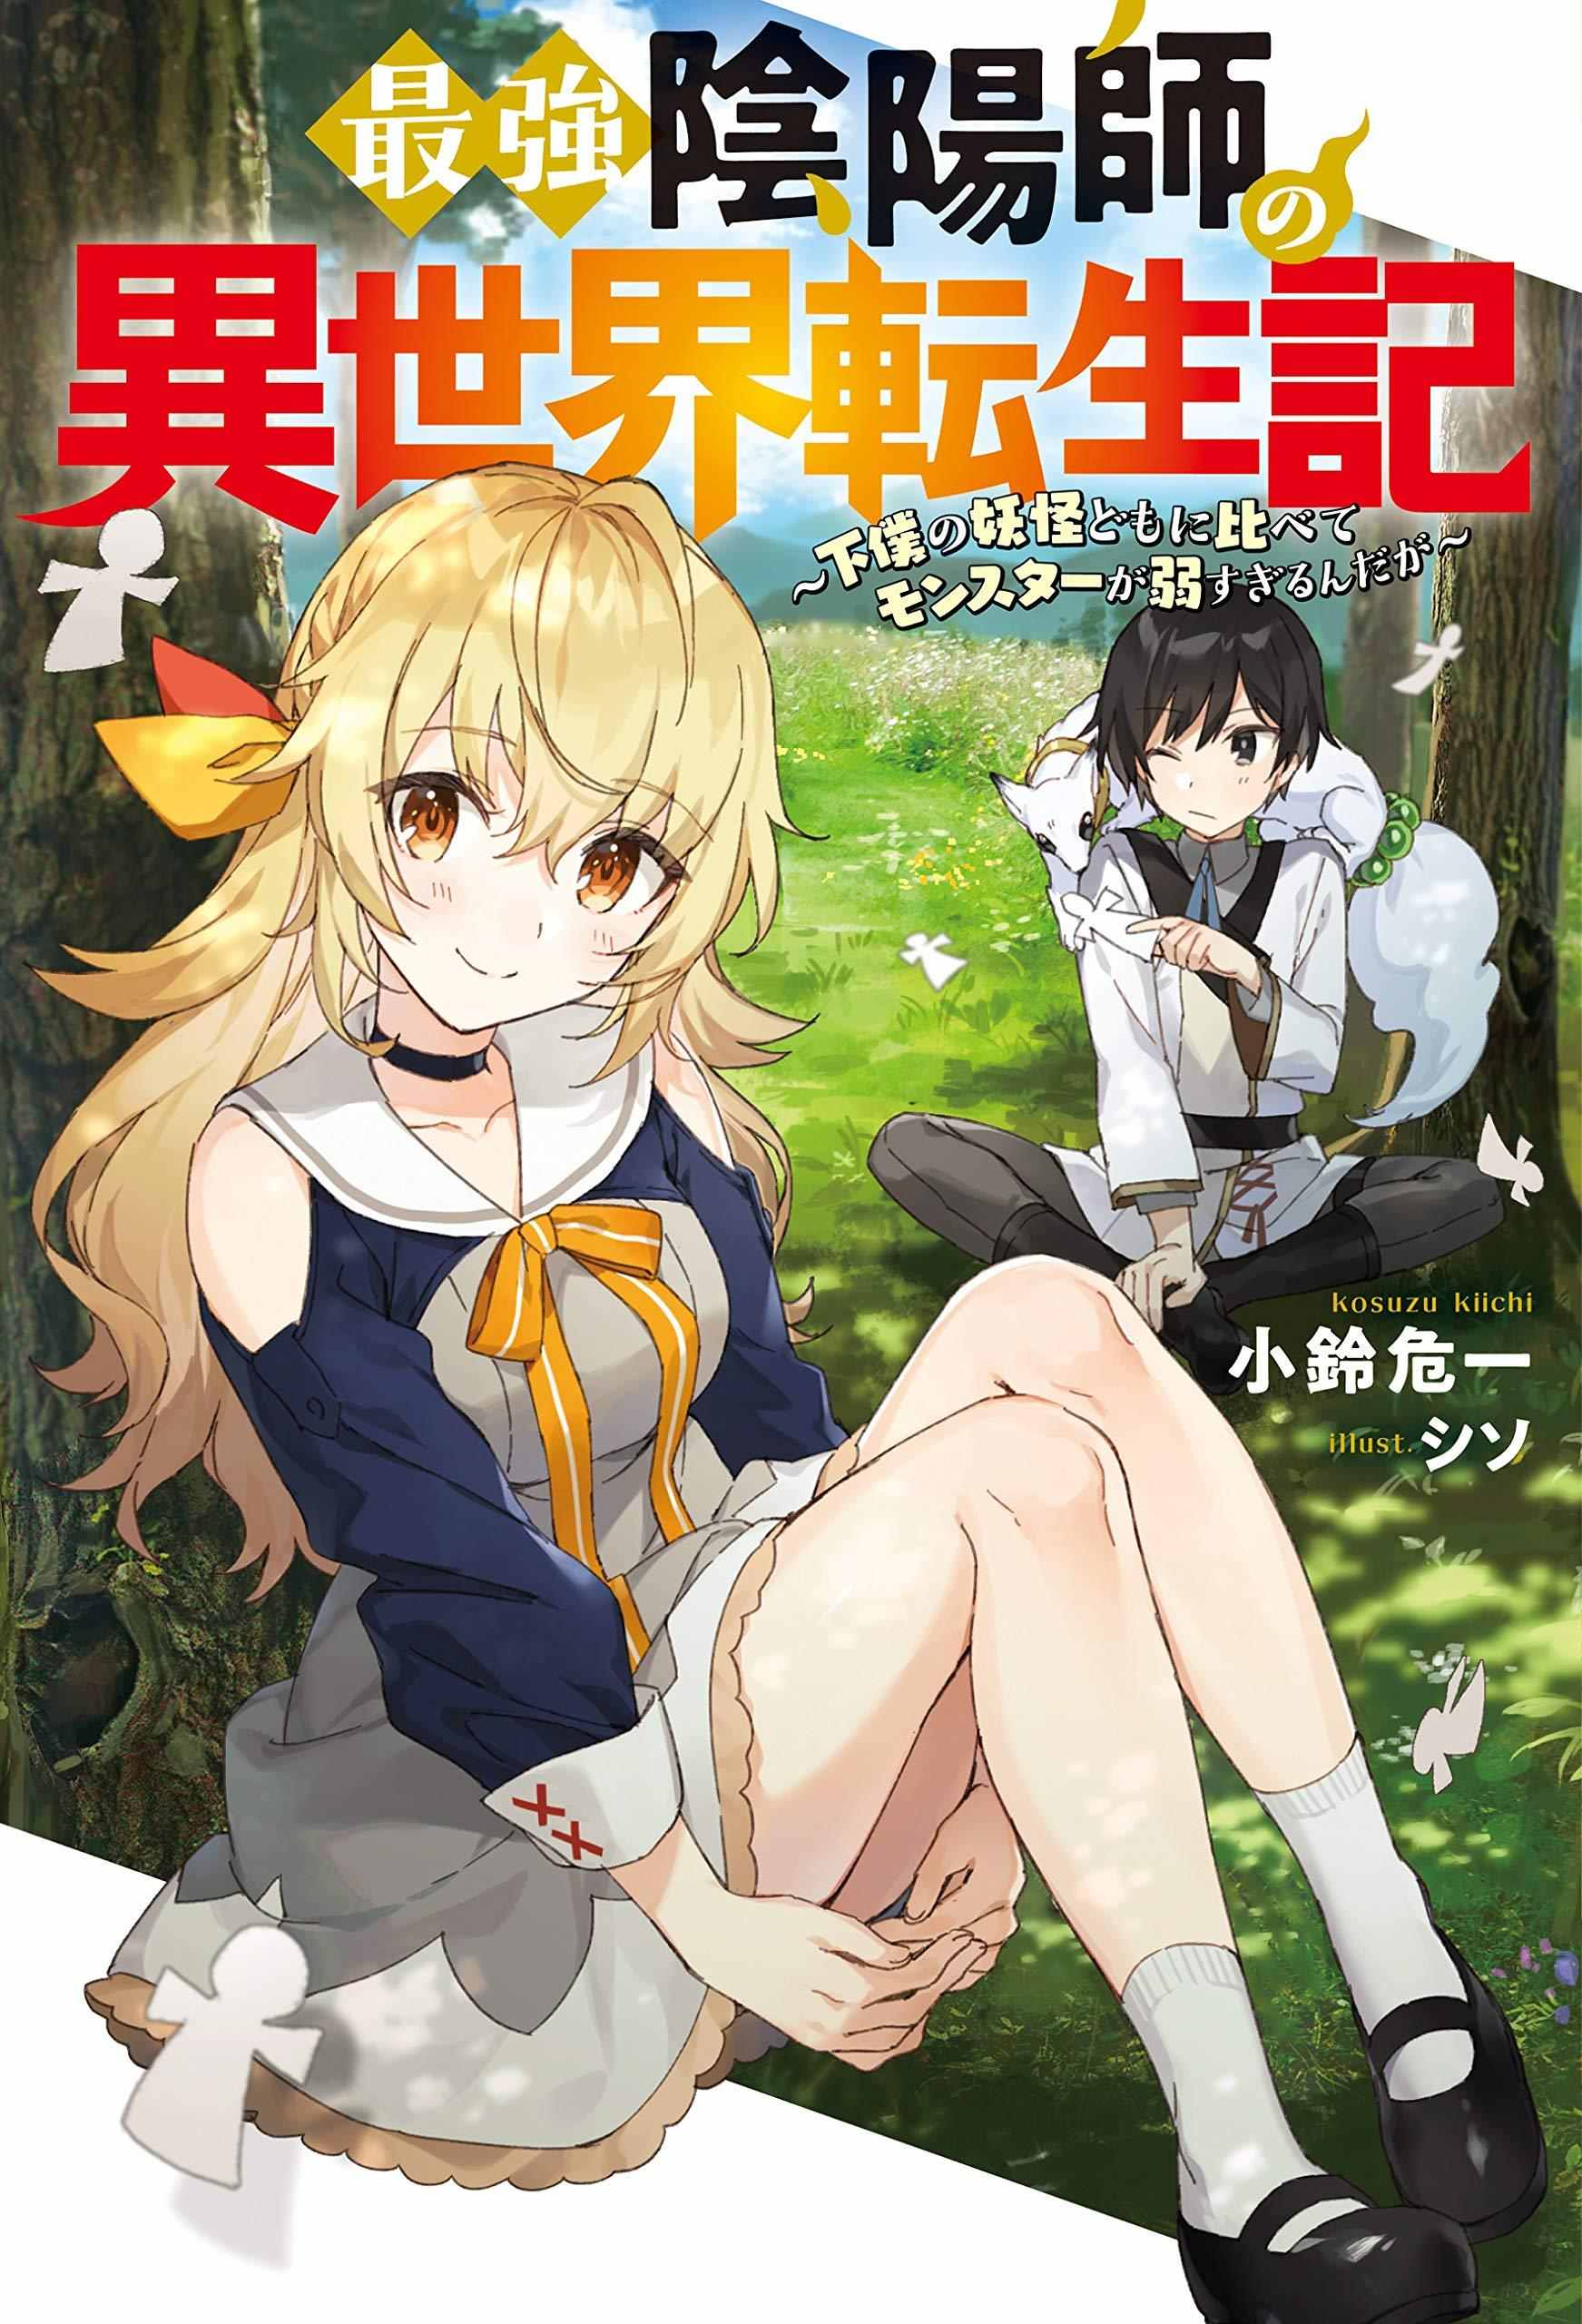 Saikyō Onmyōji no Isekai Tenseiki light novels laves til anime